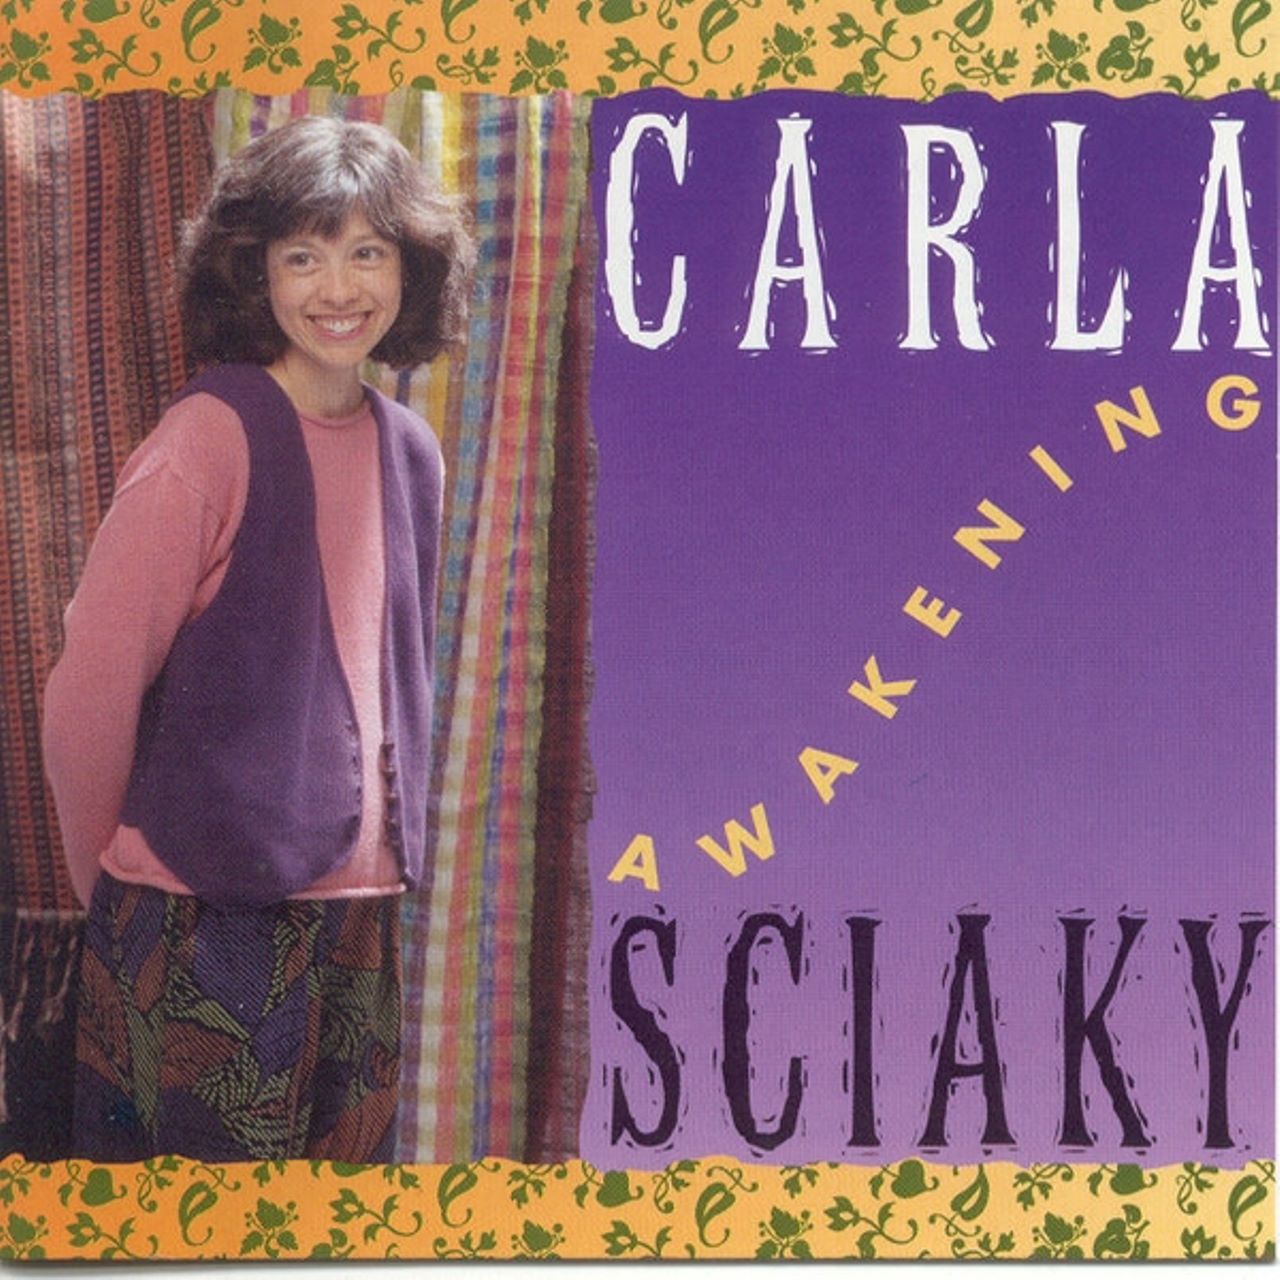 Carla Sciaky - Awakening cover album